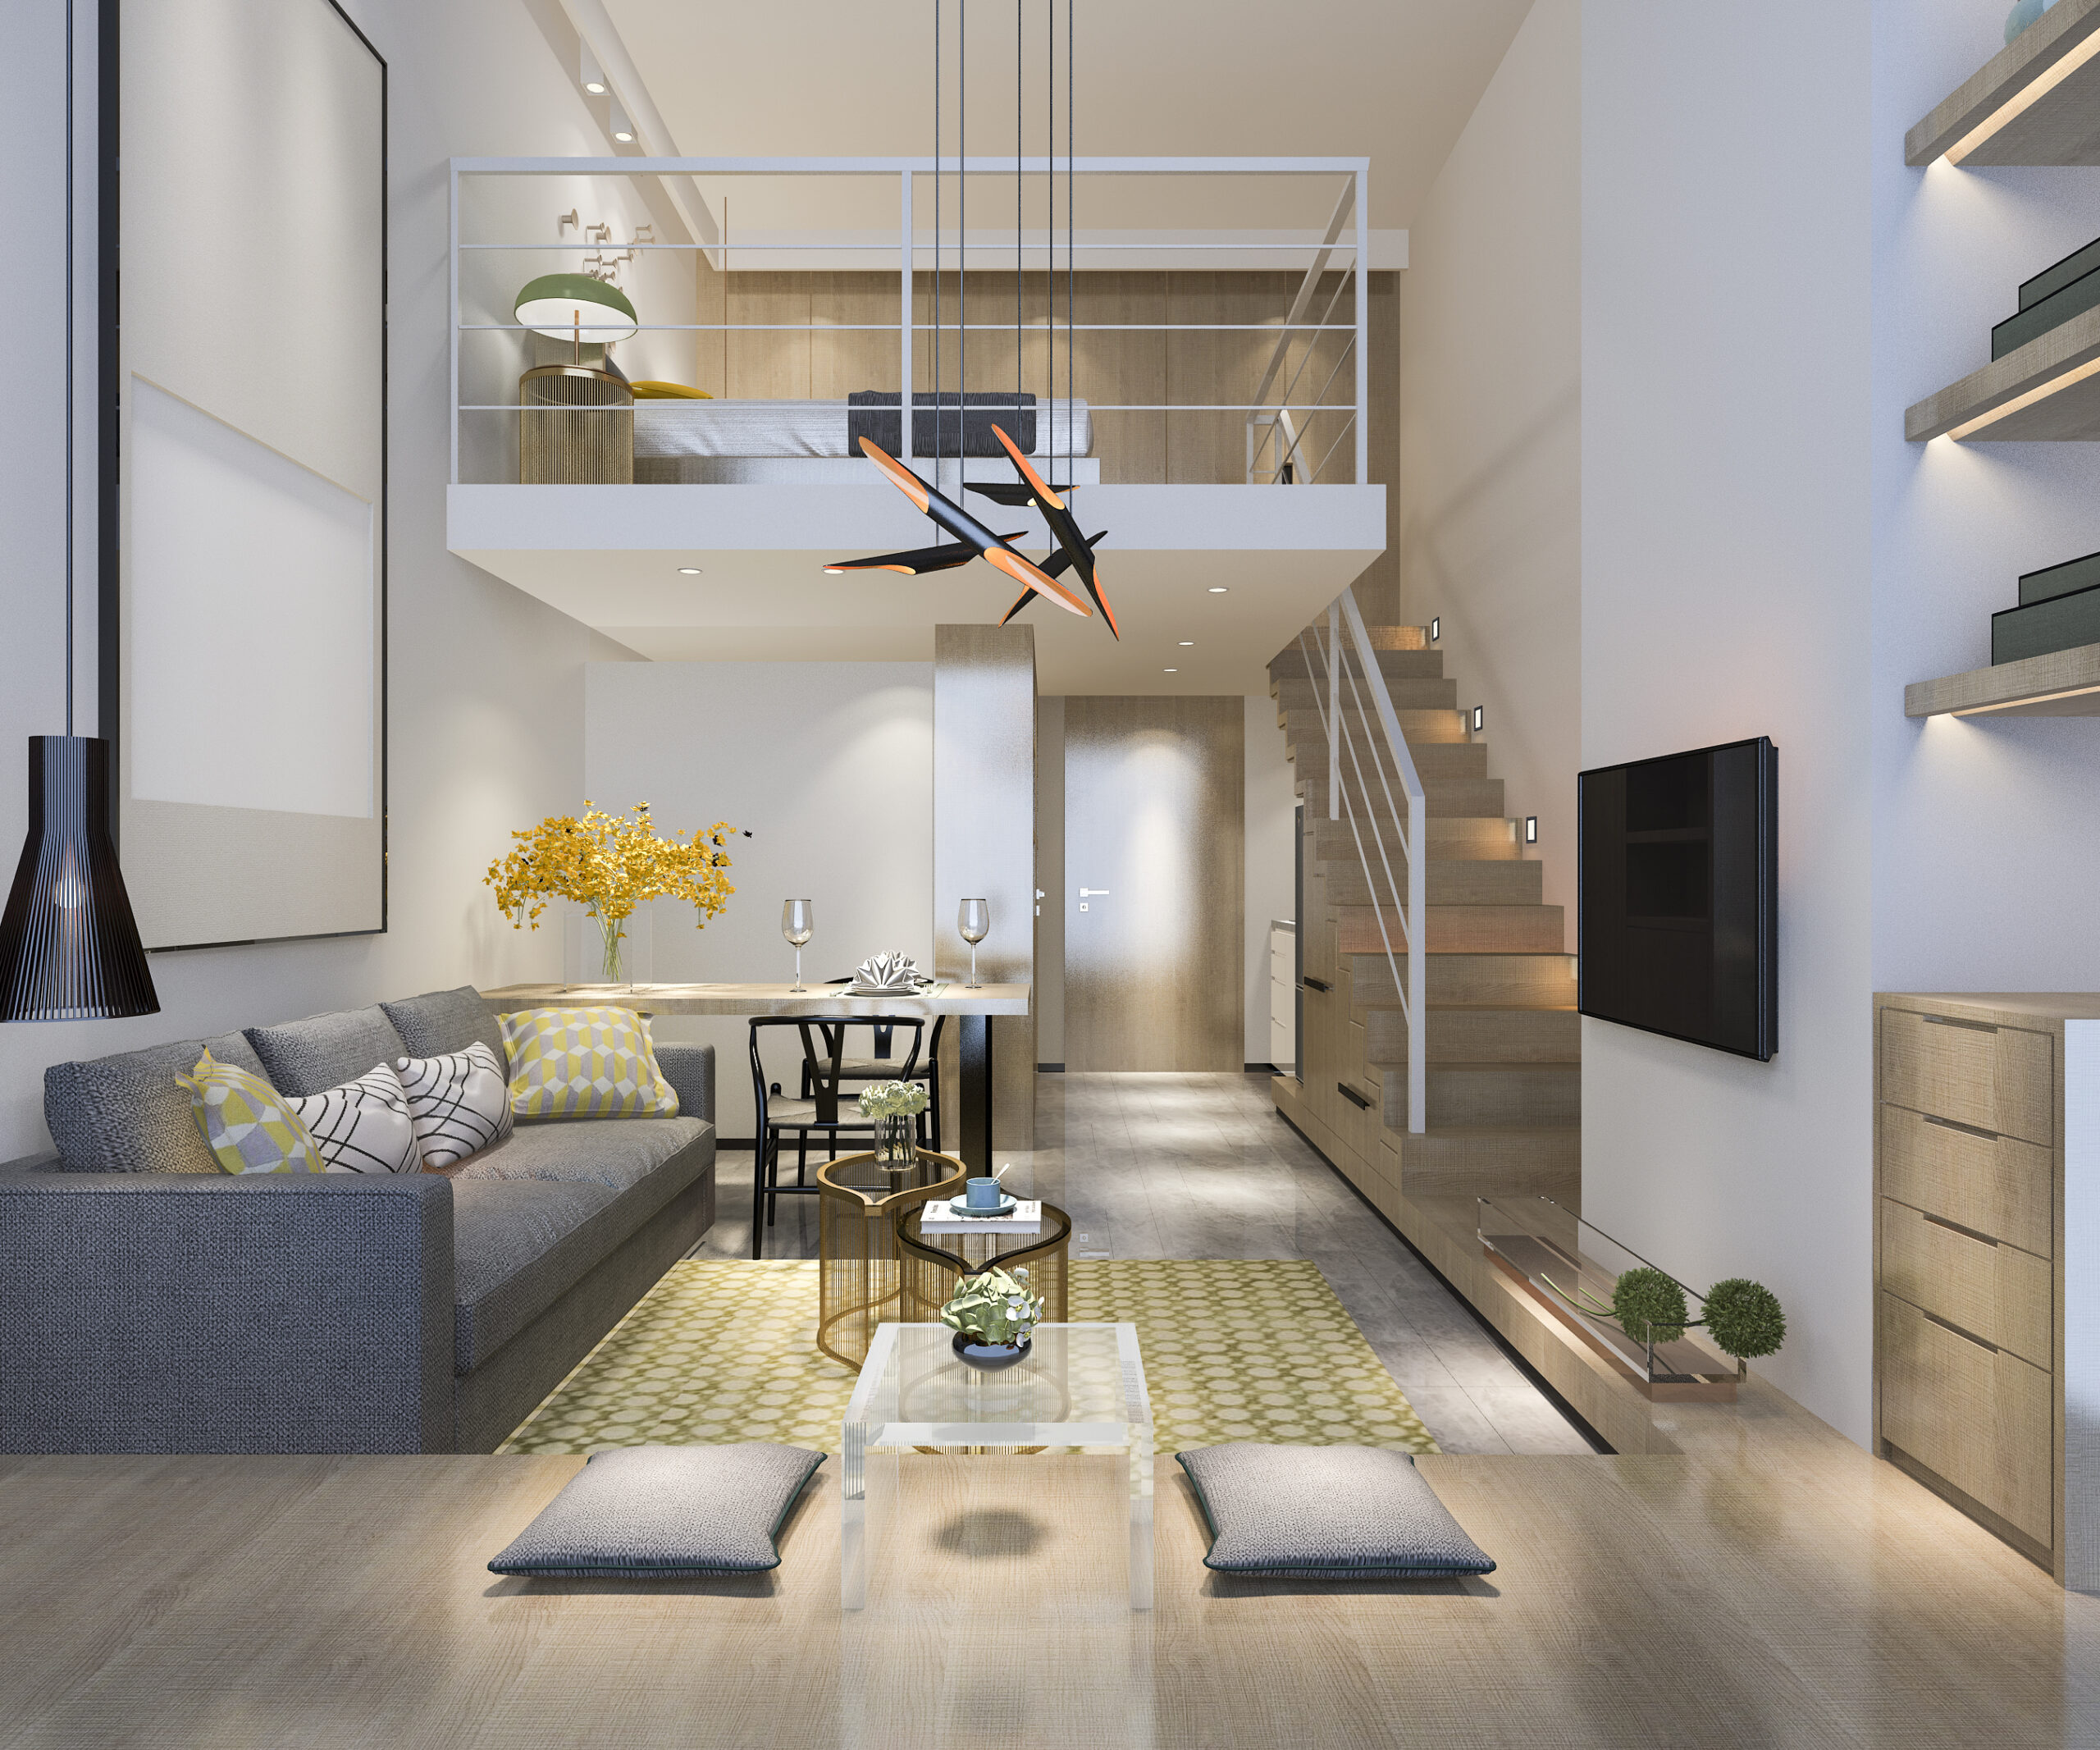 11 simple tips to make a tiny studio loft apartment liveable